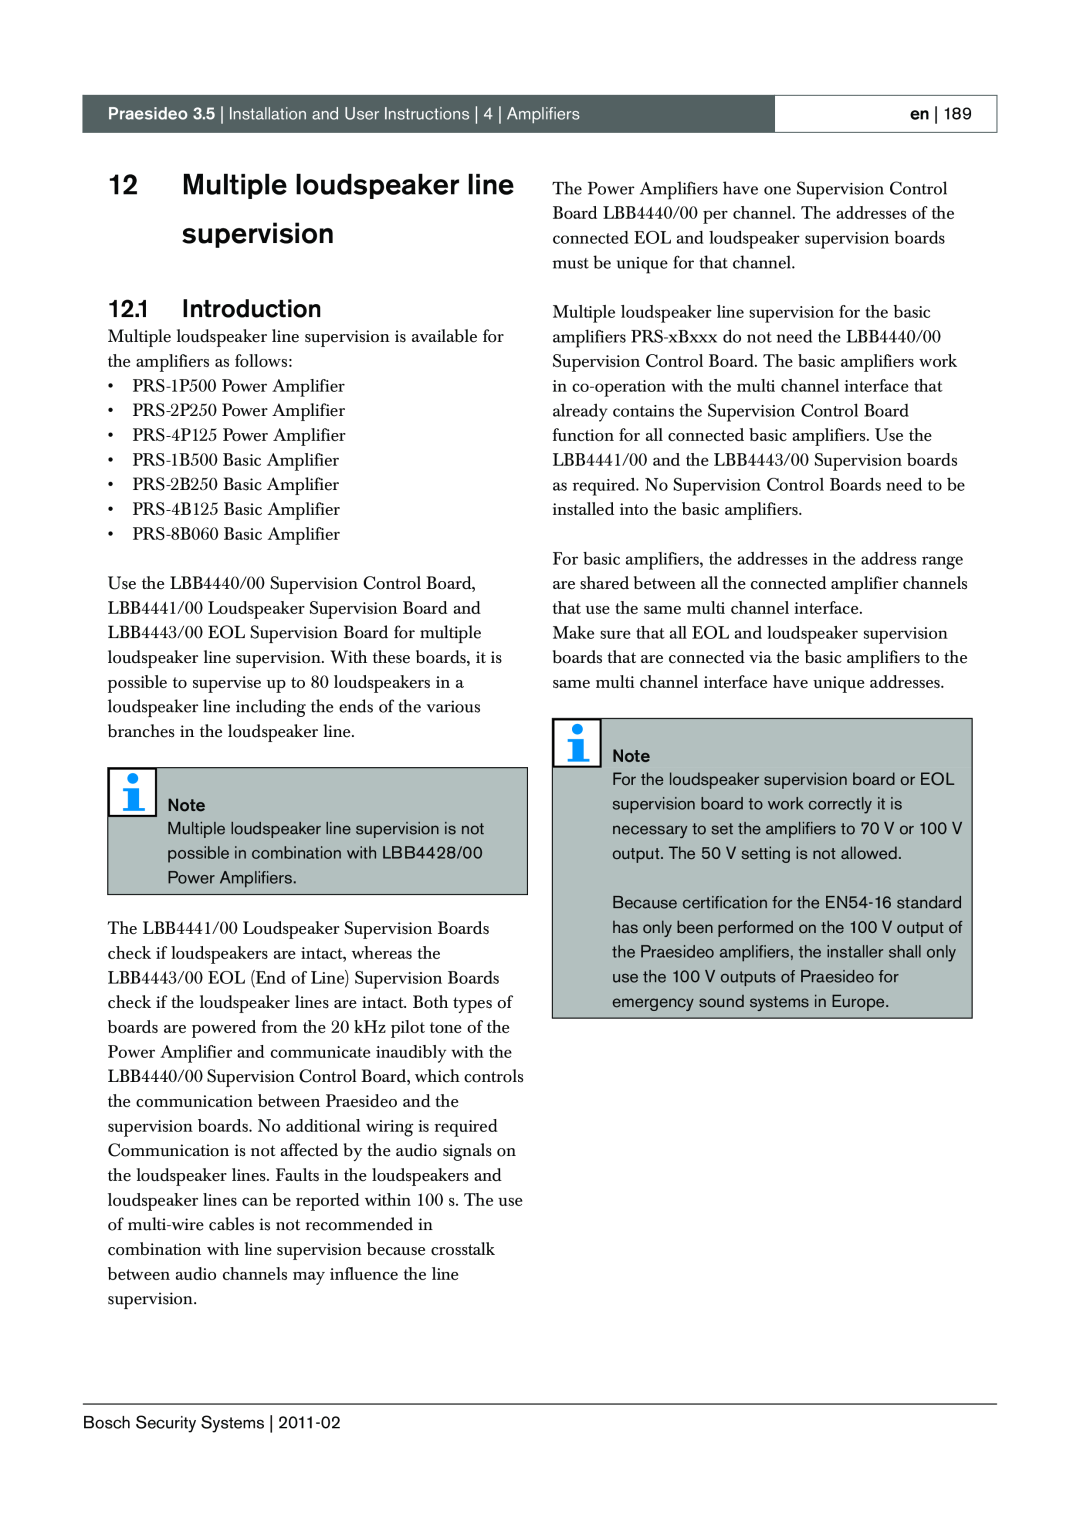 Bosch Appliances 3.5 manual 12Multiple loudspeaker line supervision, 12.1Introduction 